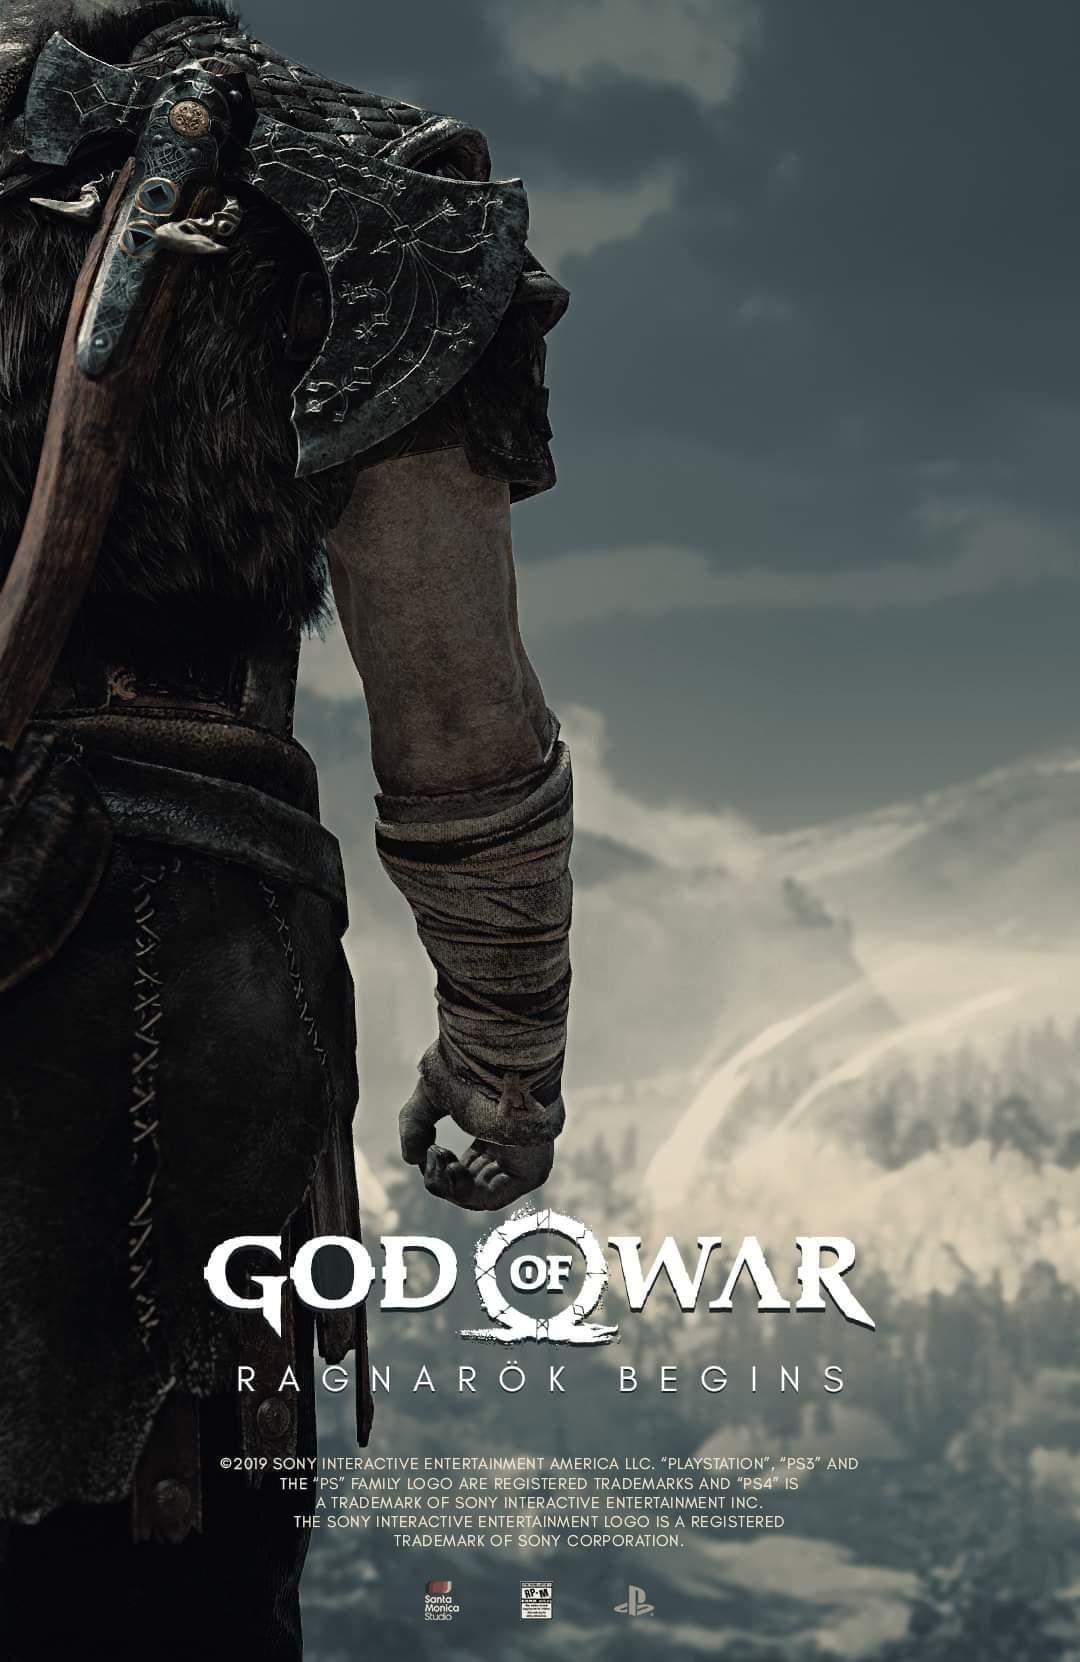 God of War Ragnarök Characters Wallpaper 4k Ultra HD ID11258